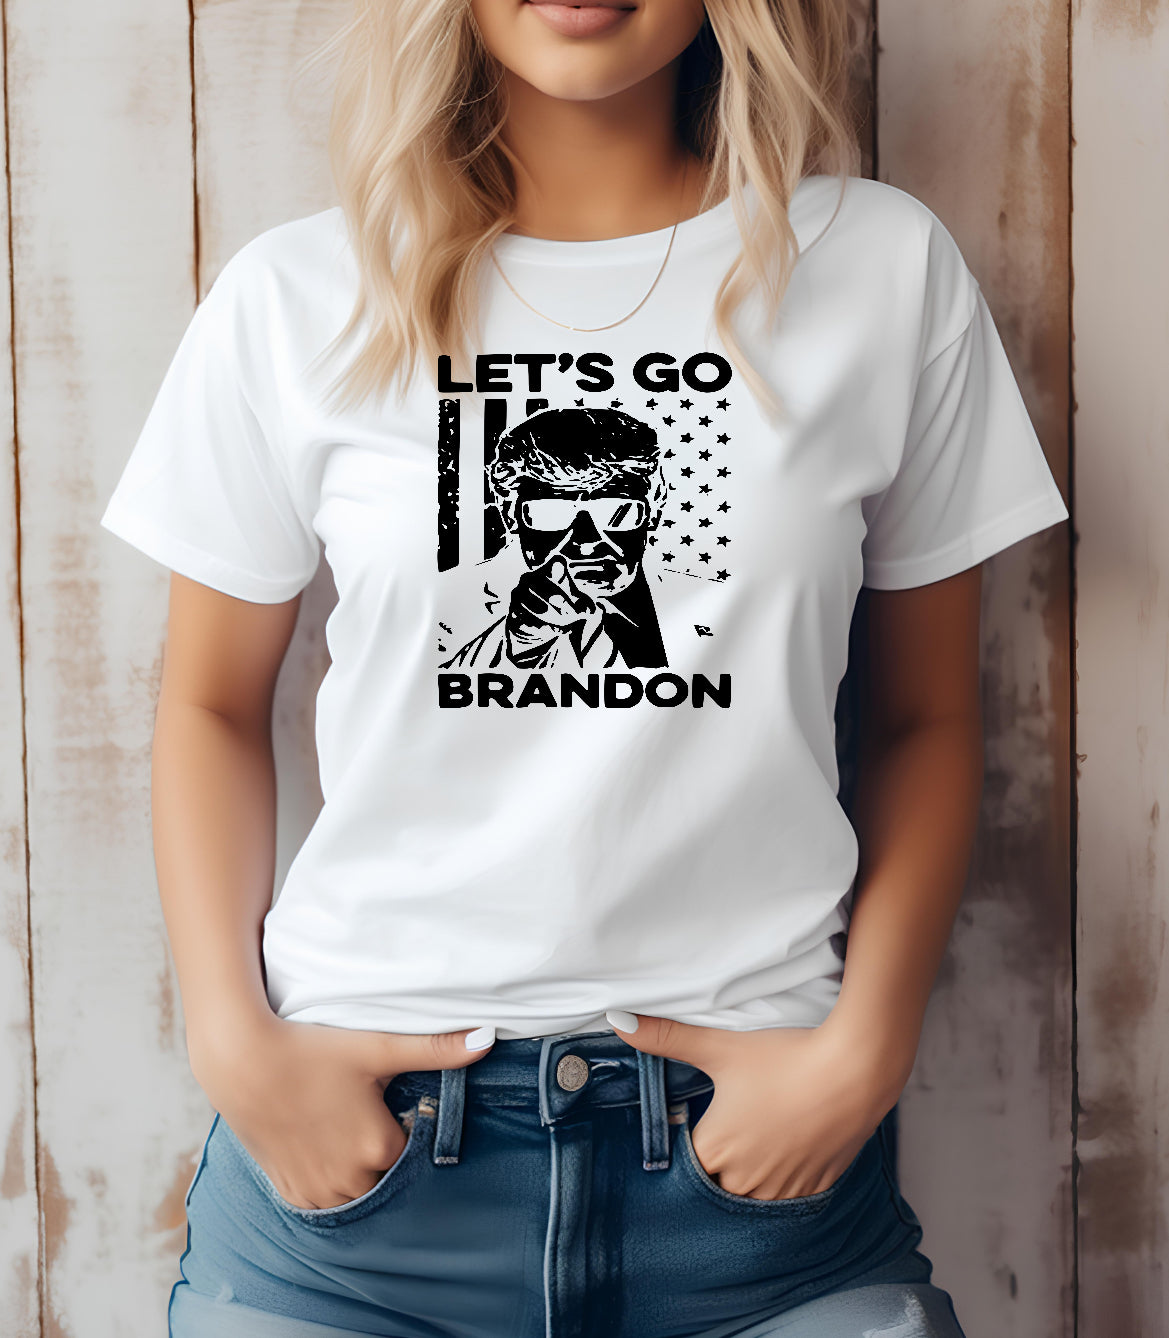 Let’s Go Brandon Screen Print